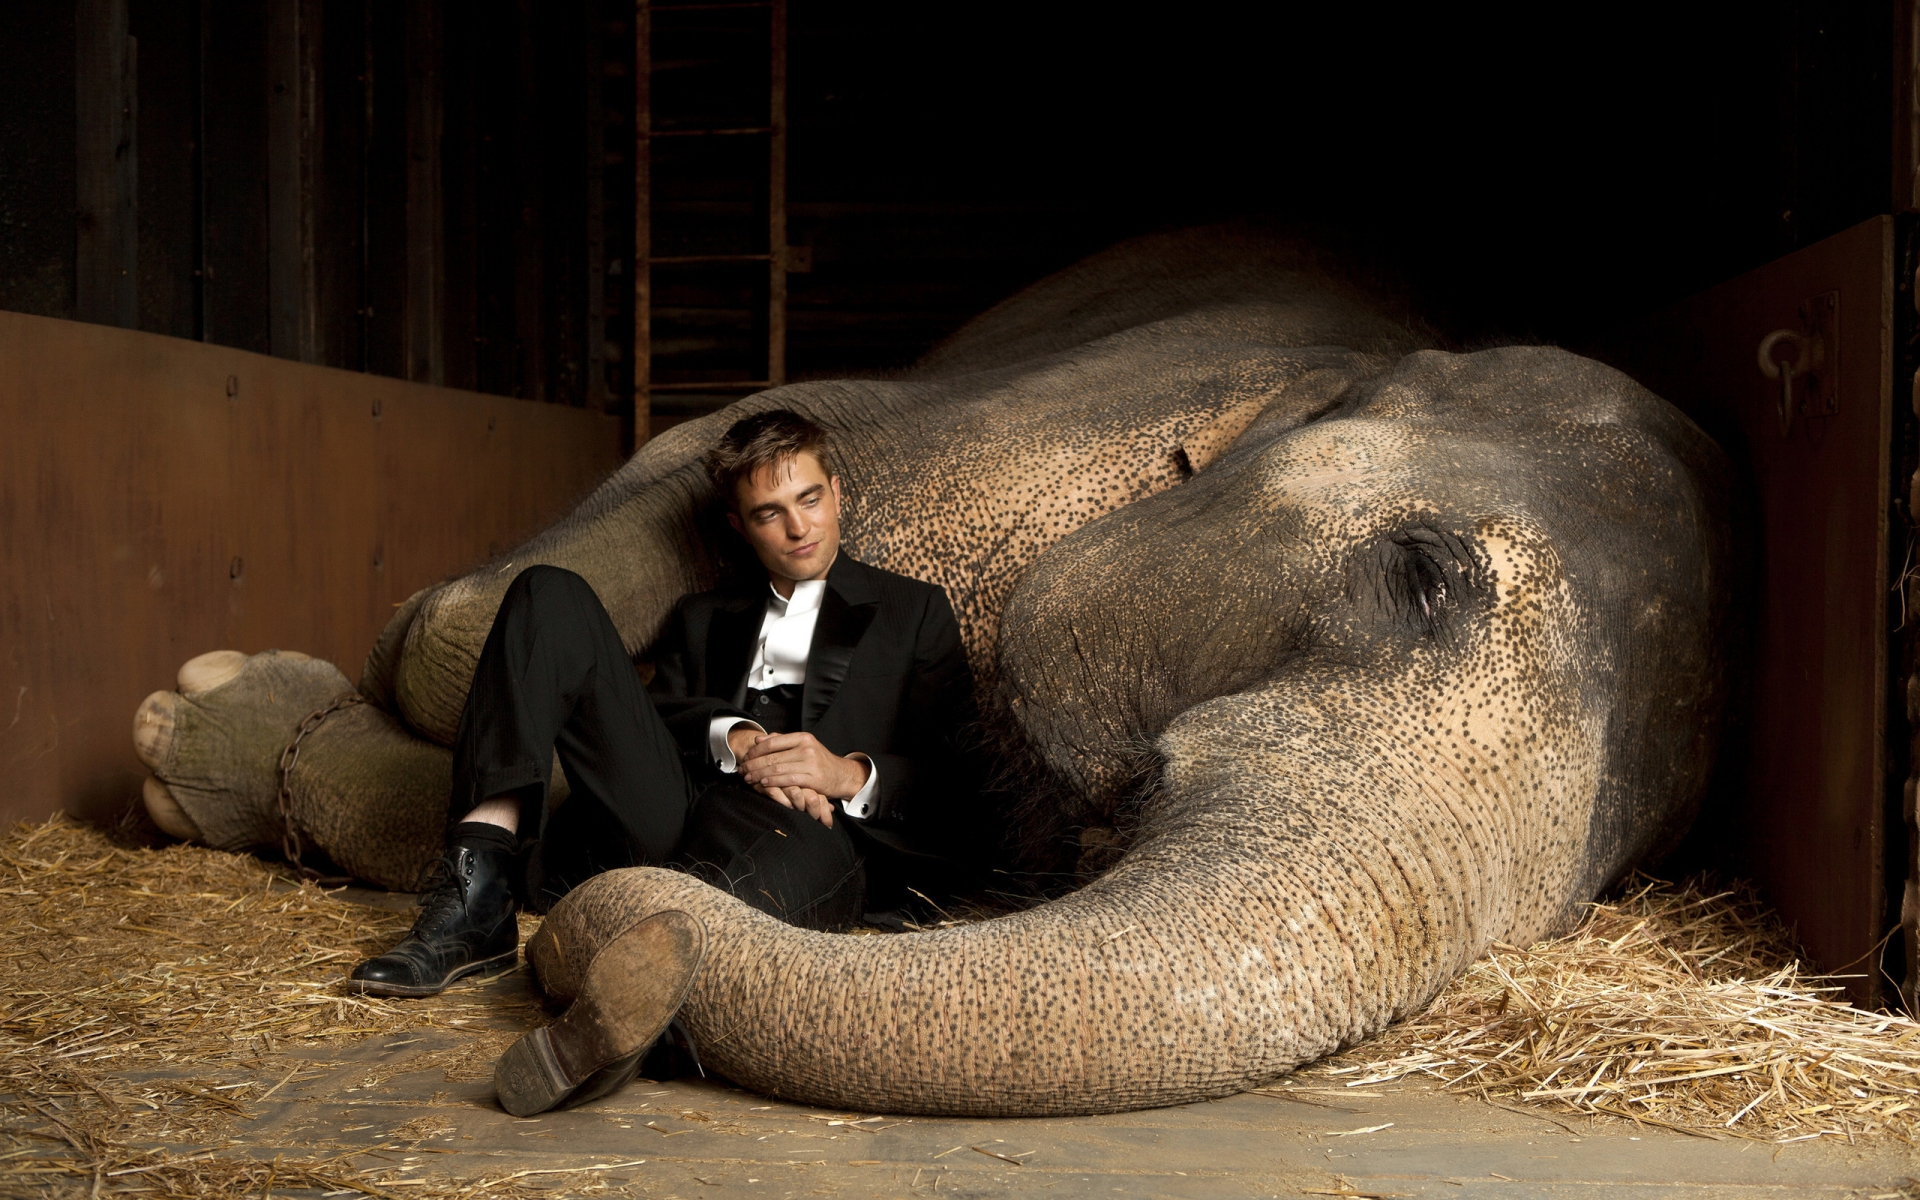 Robert Pattinson Close to Elephant for 1920 x 1200 widescreen resolution